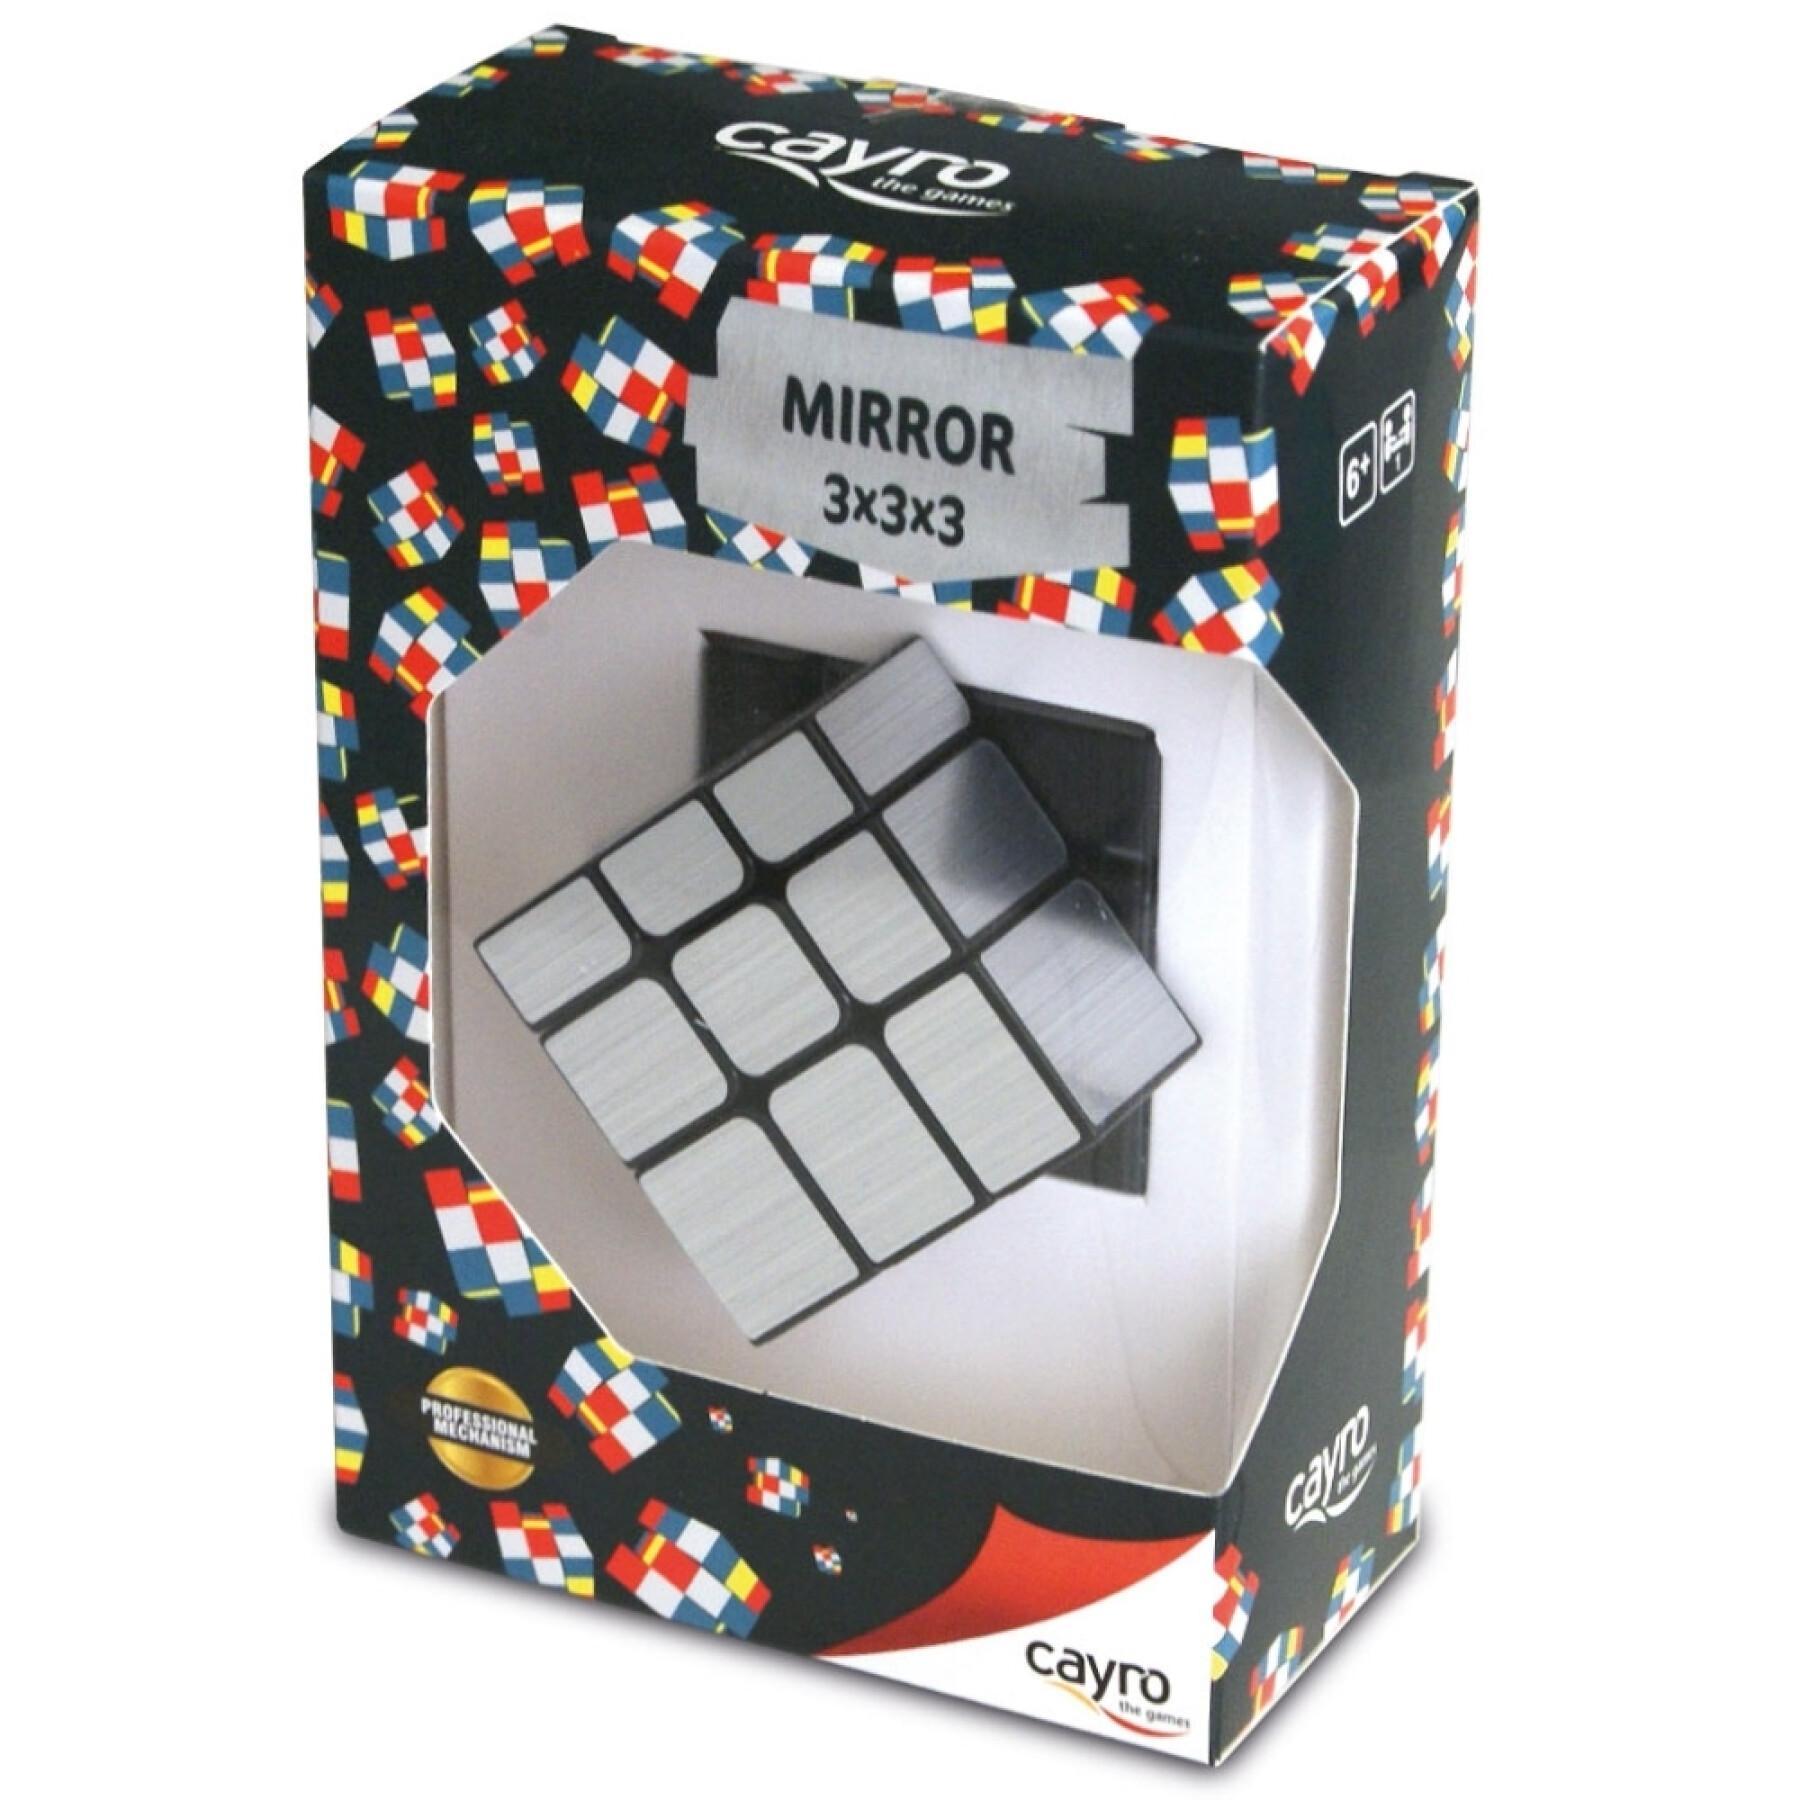 Cubo magico Cayro Mirror